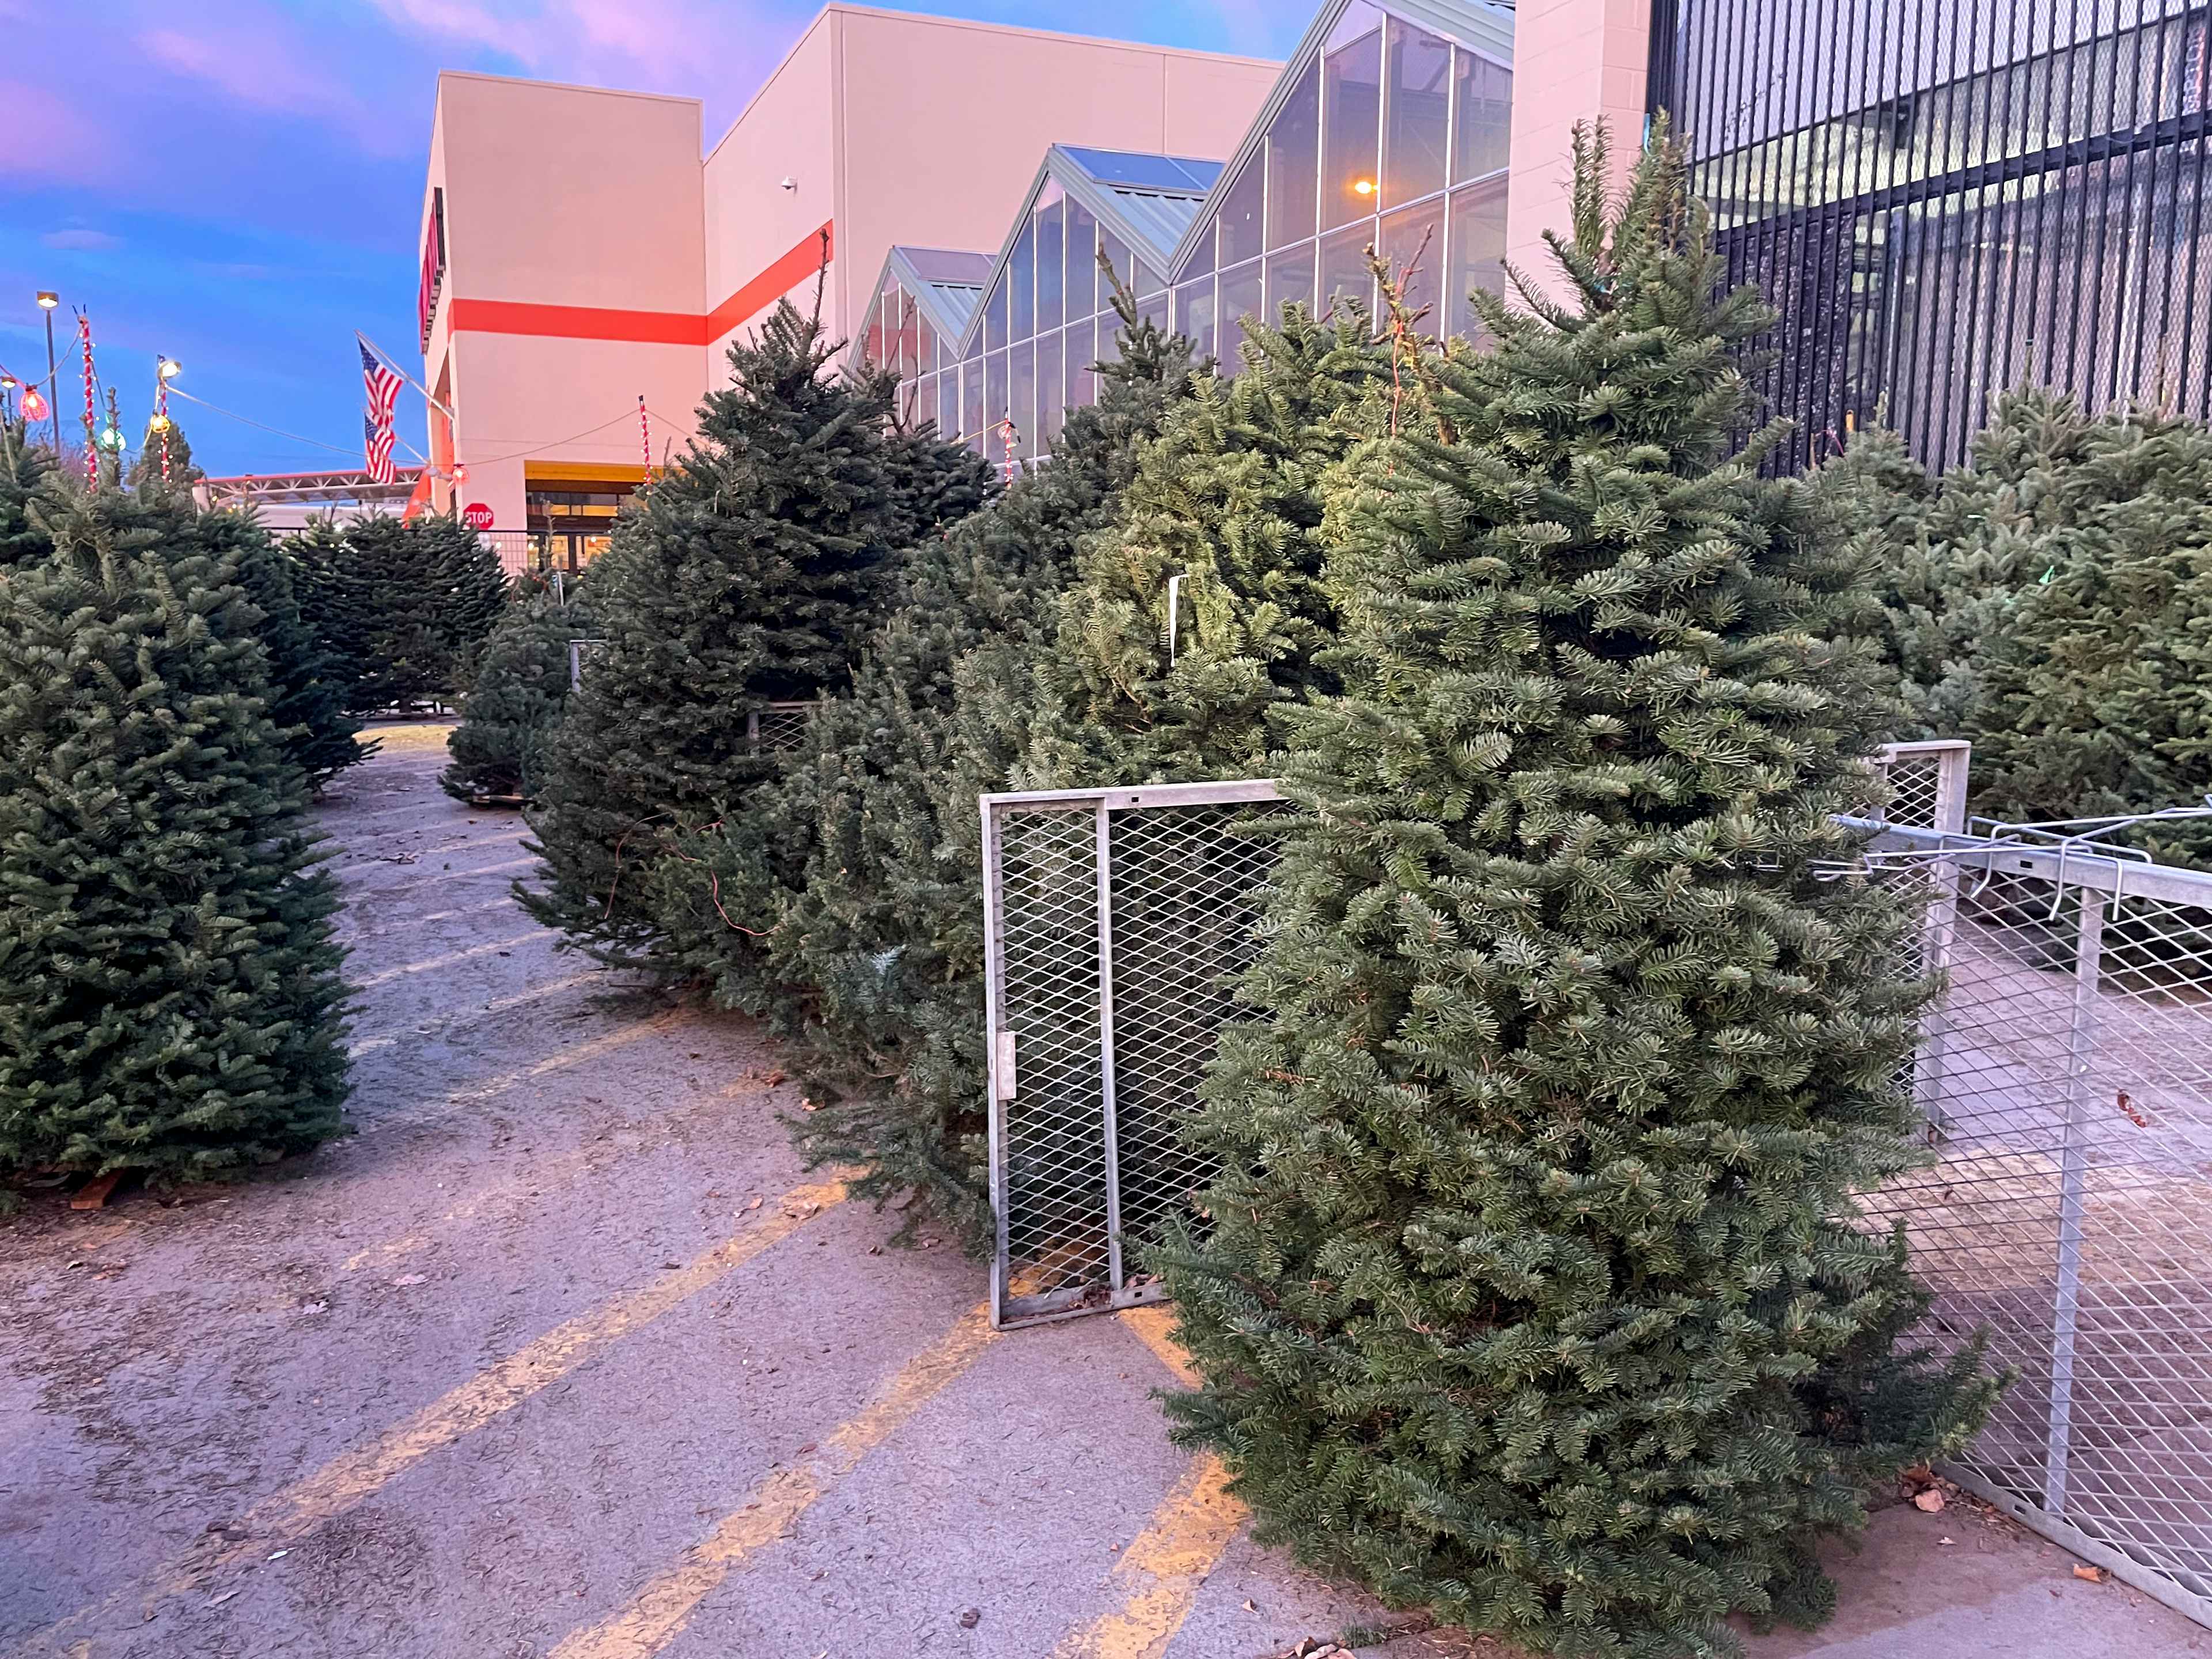 Fresh cut Christmas Trees at Home Depot